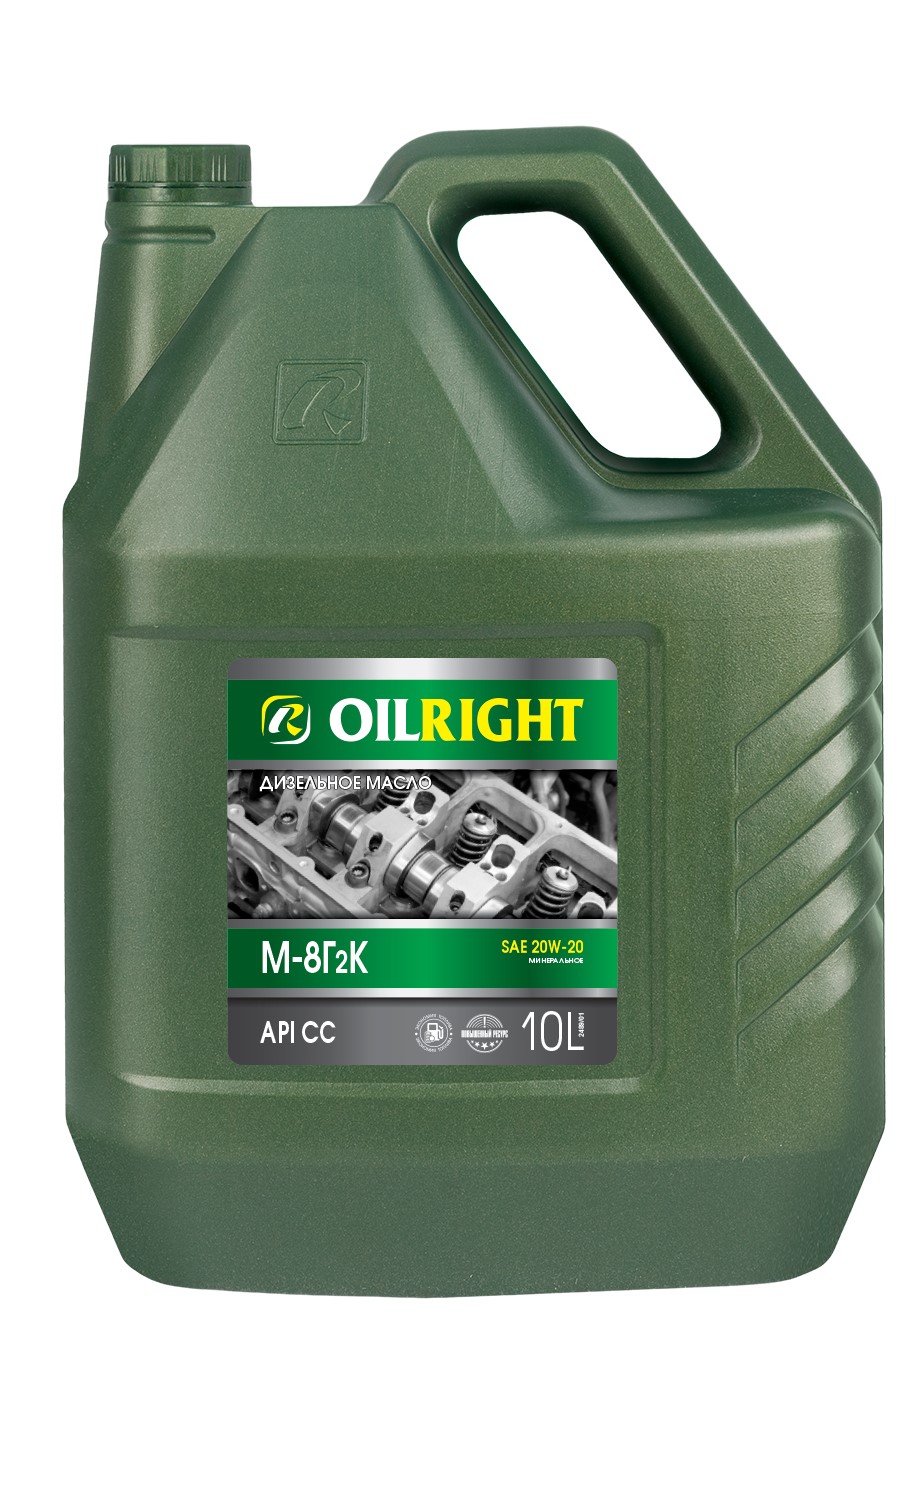 фото Дизельное моторное масло oilright м-8г2к 20w-20 cc 10л